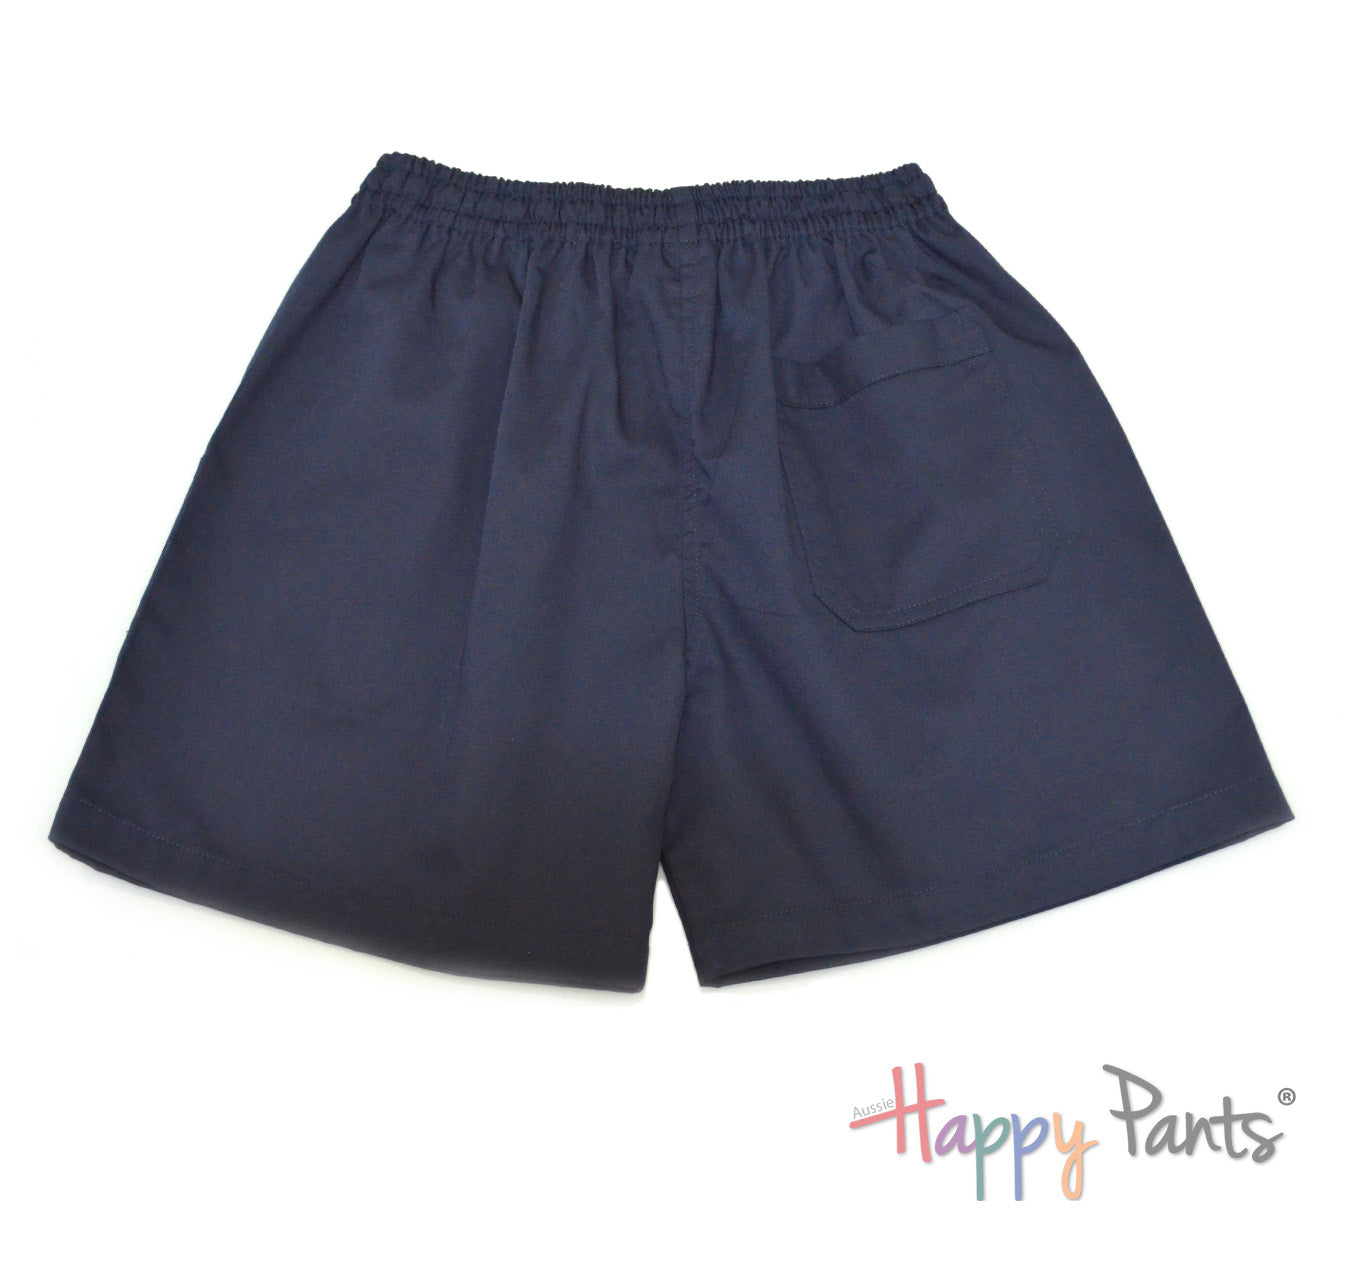 Navy blue shorts with elastic waist holiday pants resort wear Australia comfy bordies